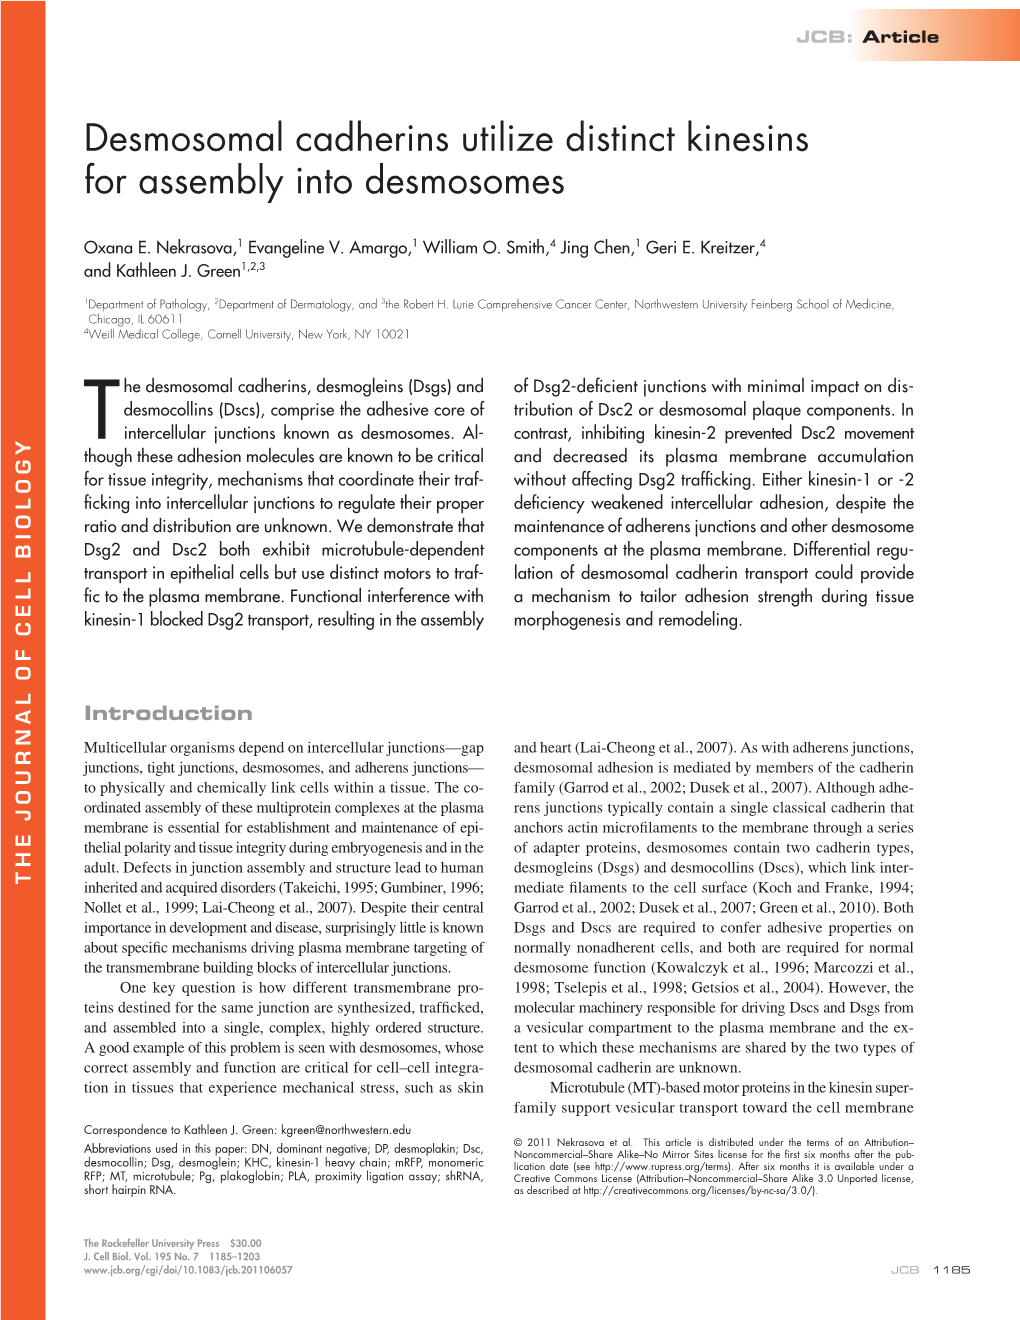 Desmosomal Cadherins Utilize Distinct Kinesins for Assembly Into Desmosomes